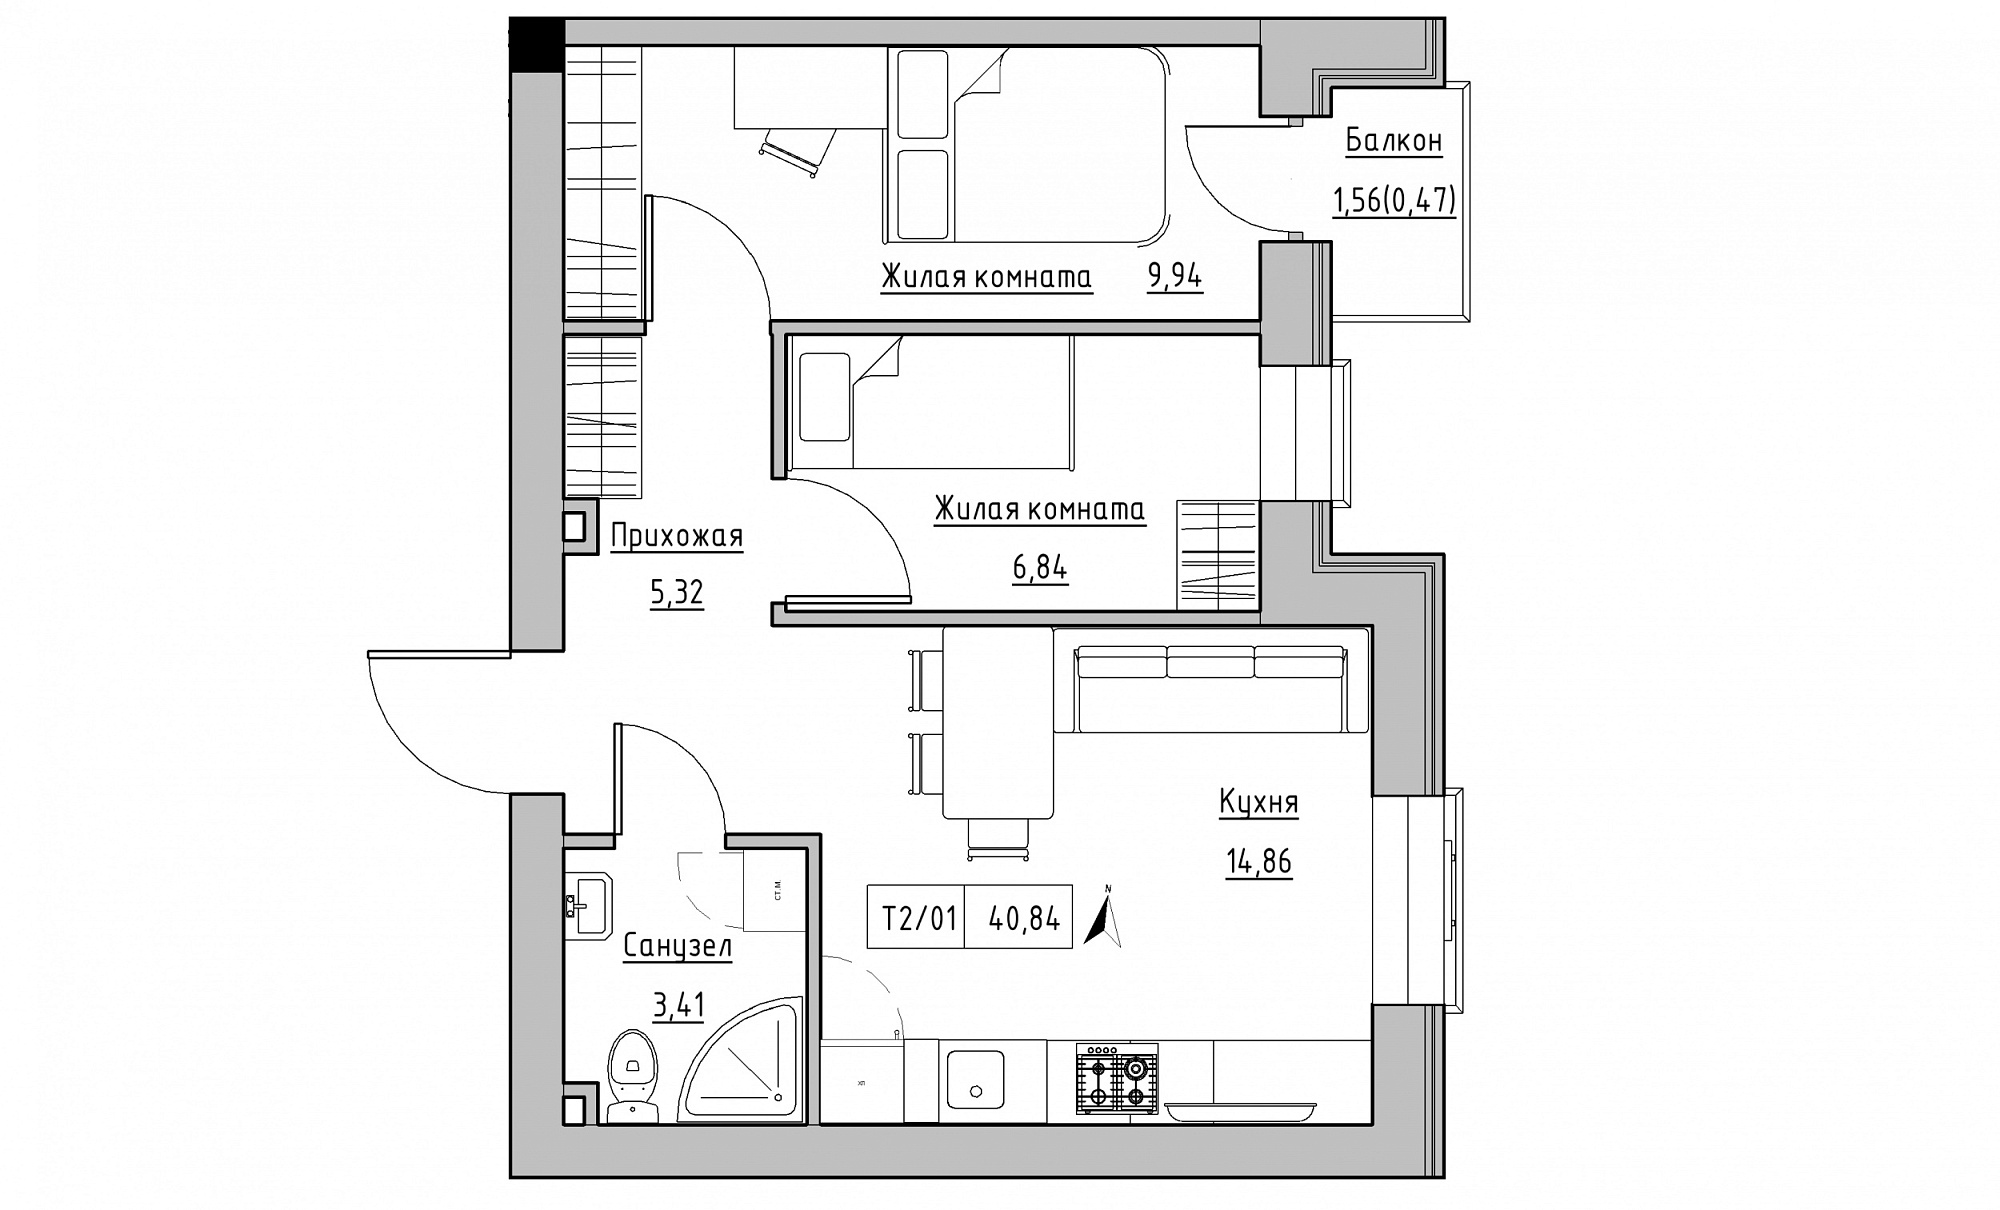 Planning 2-rm flats area 40.84m2, KS-015-03/0006.